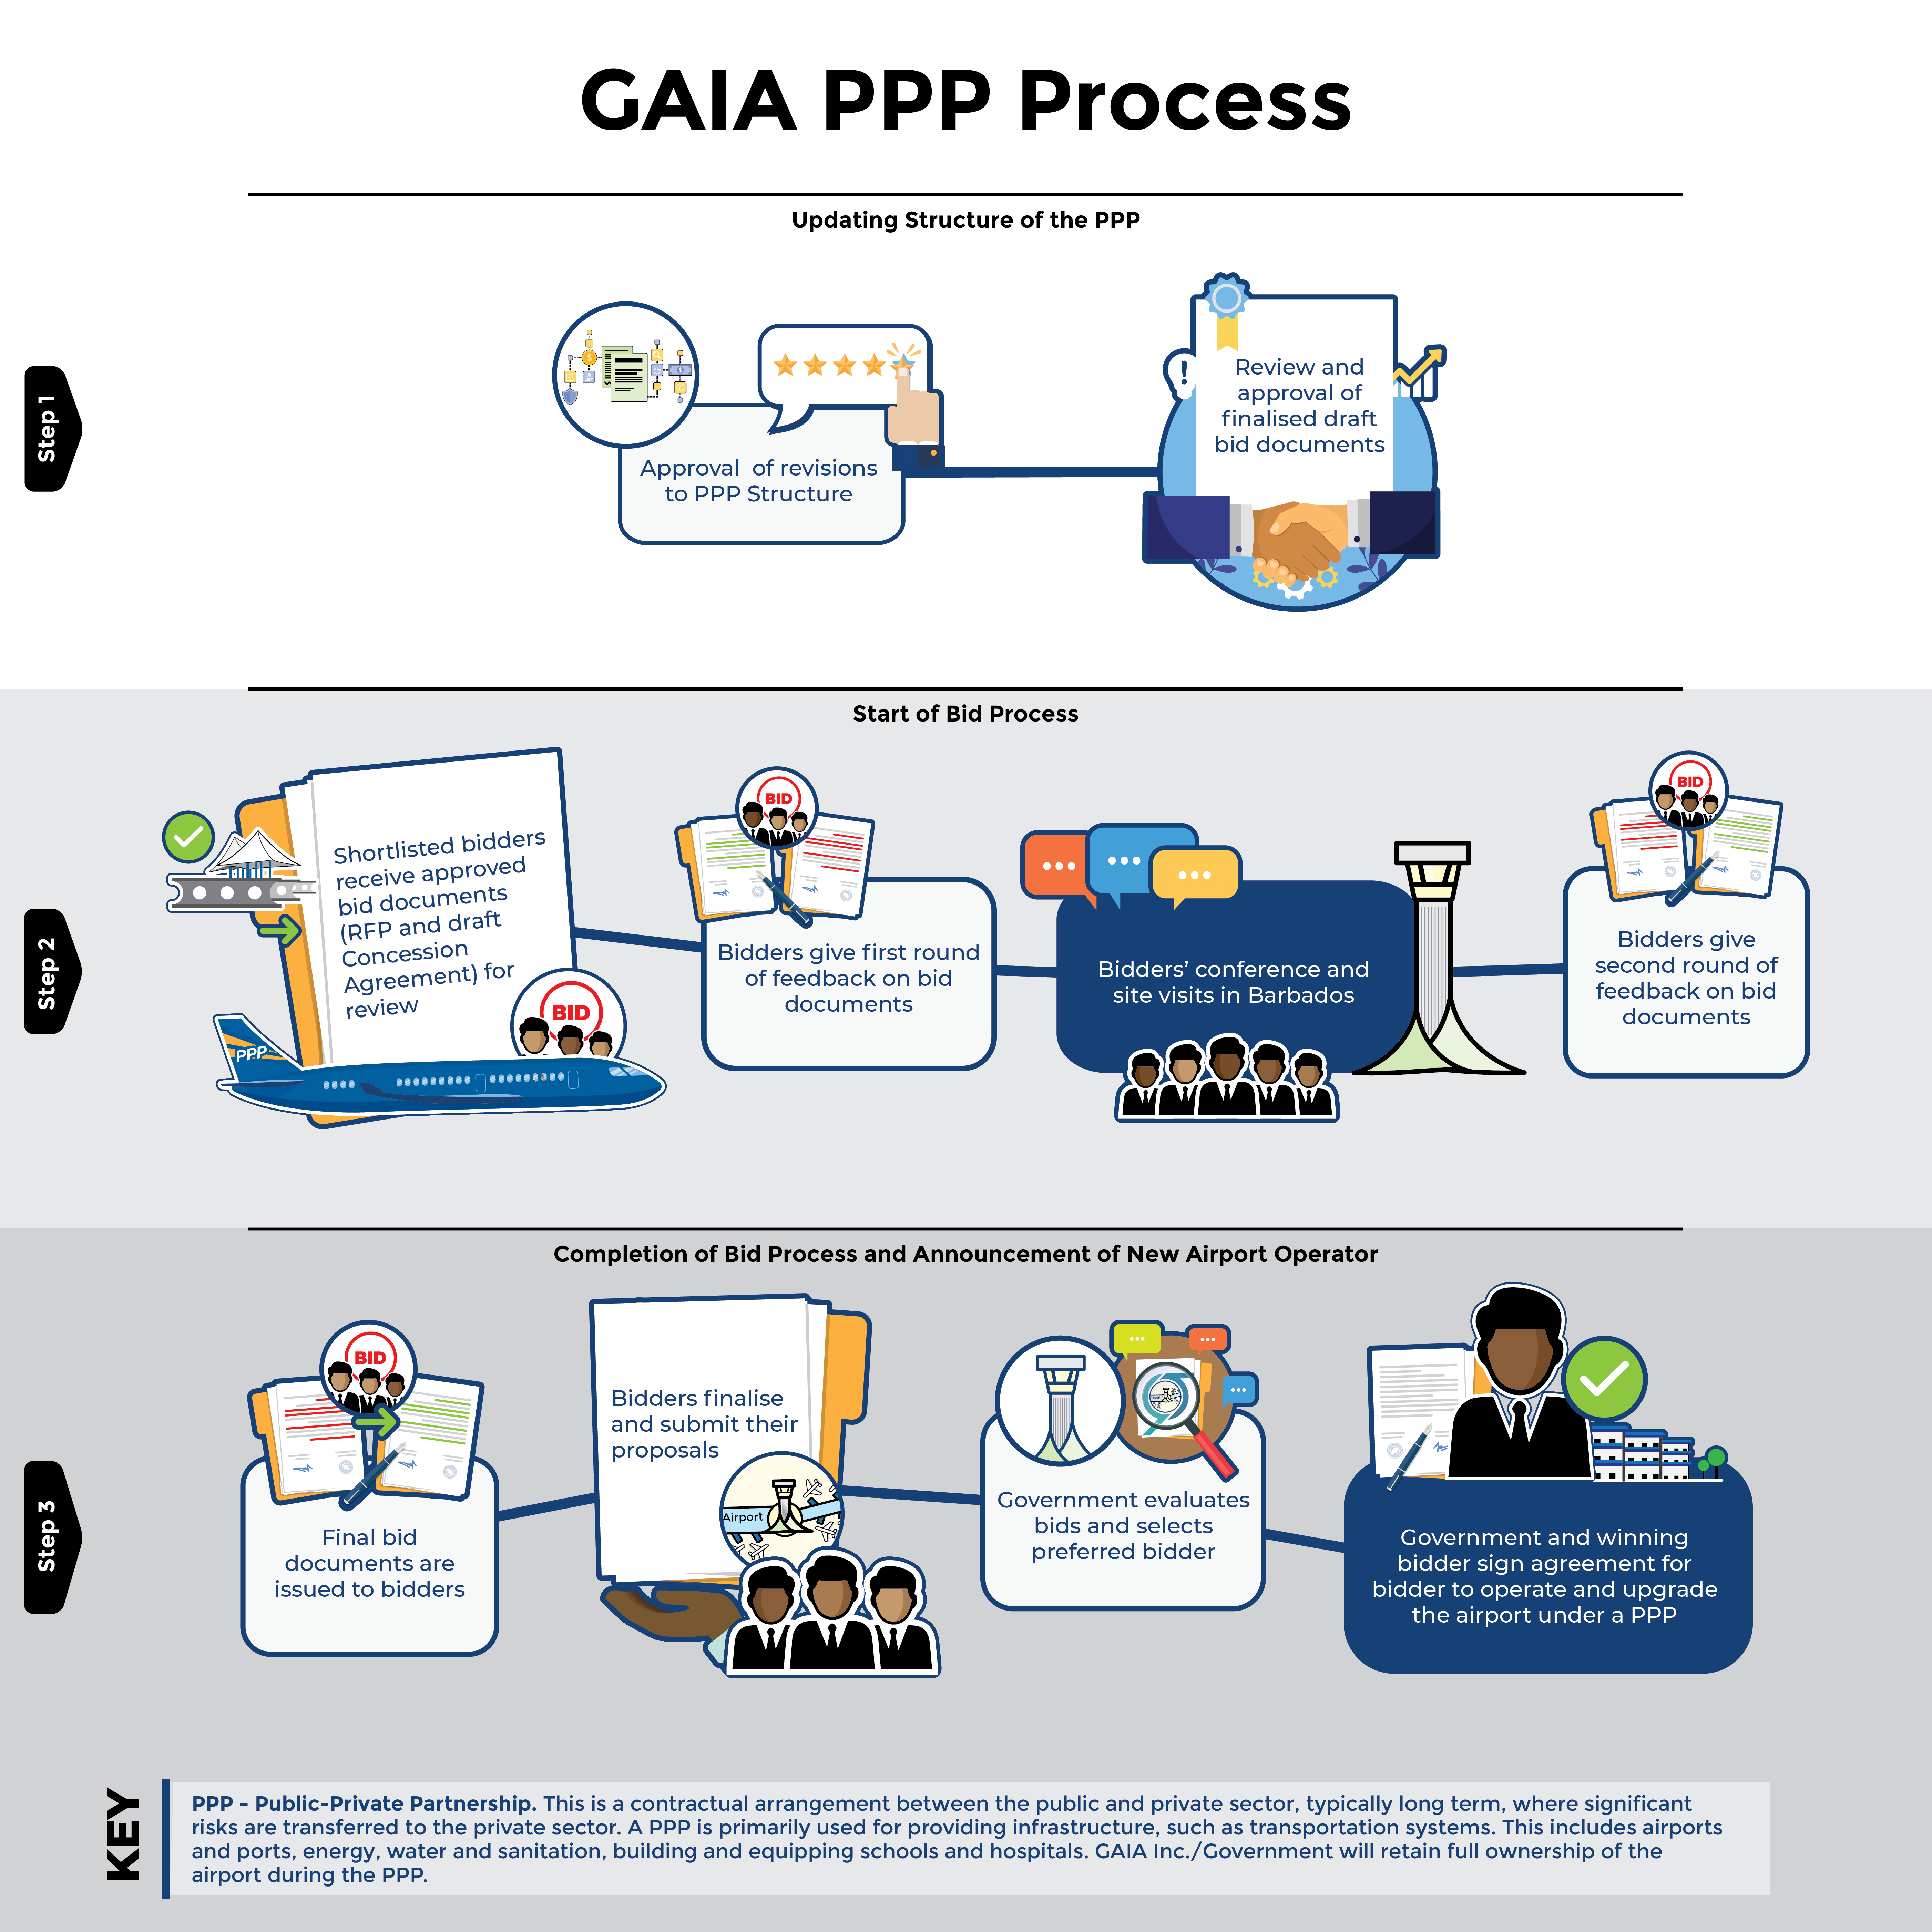 GAIA PPP Process